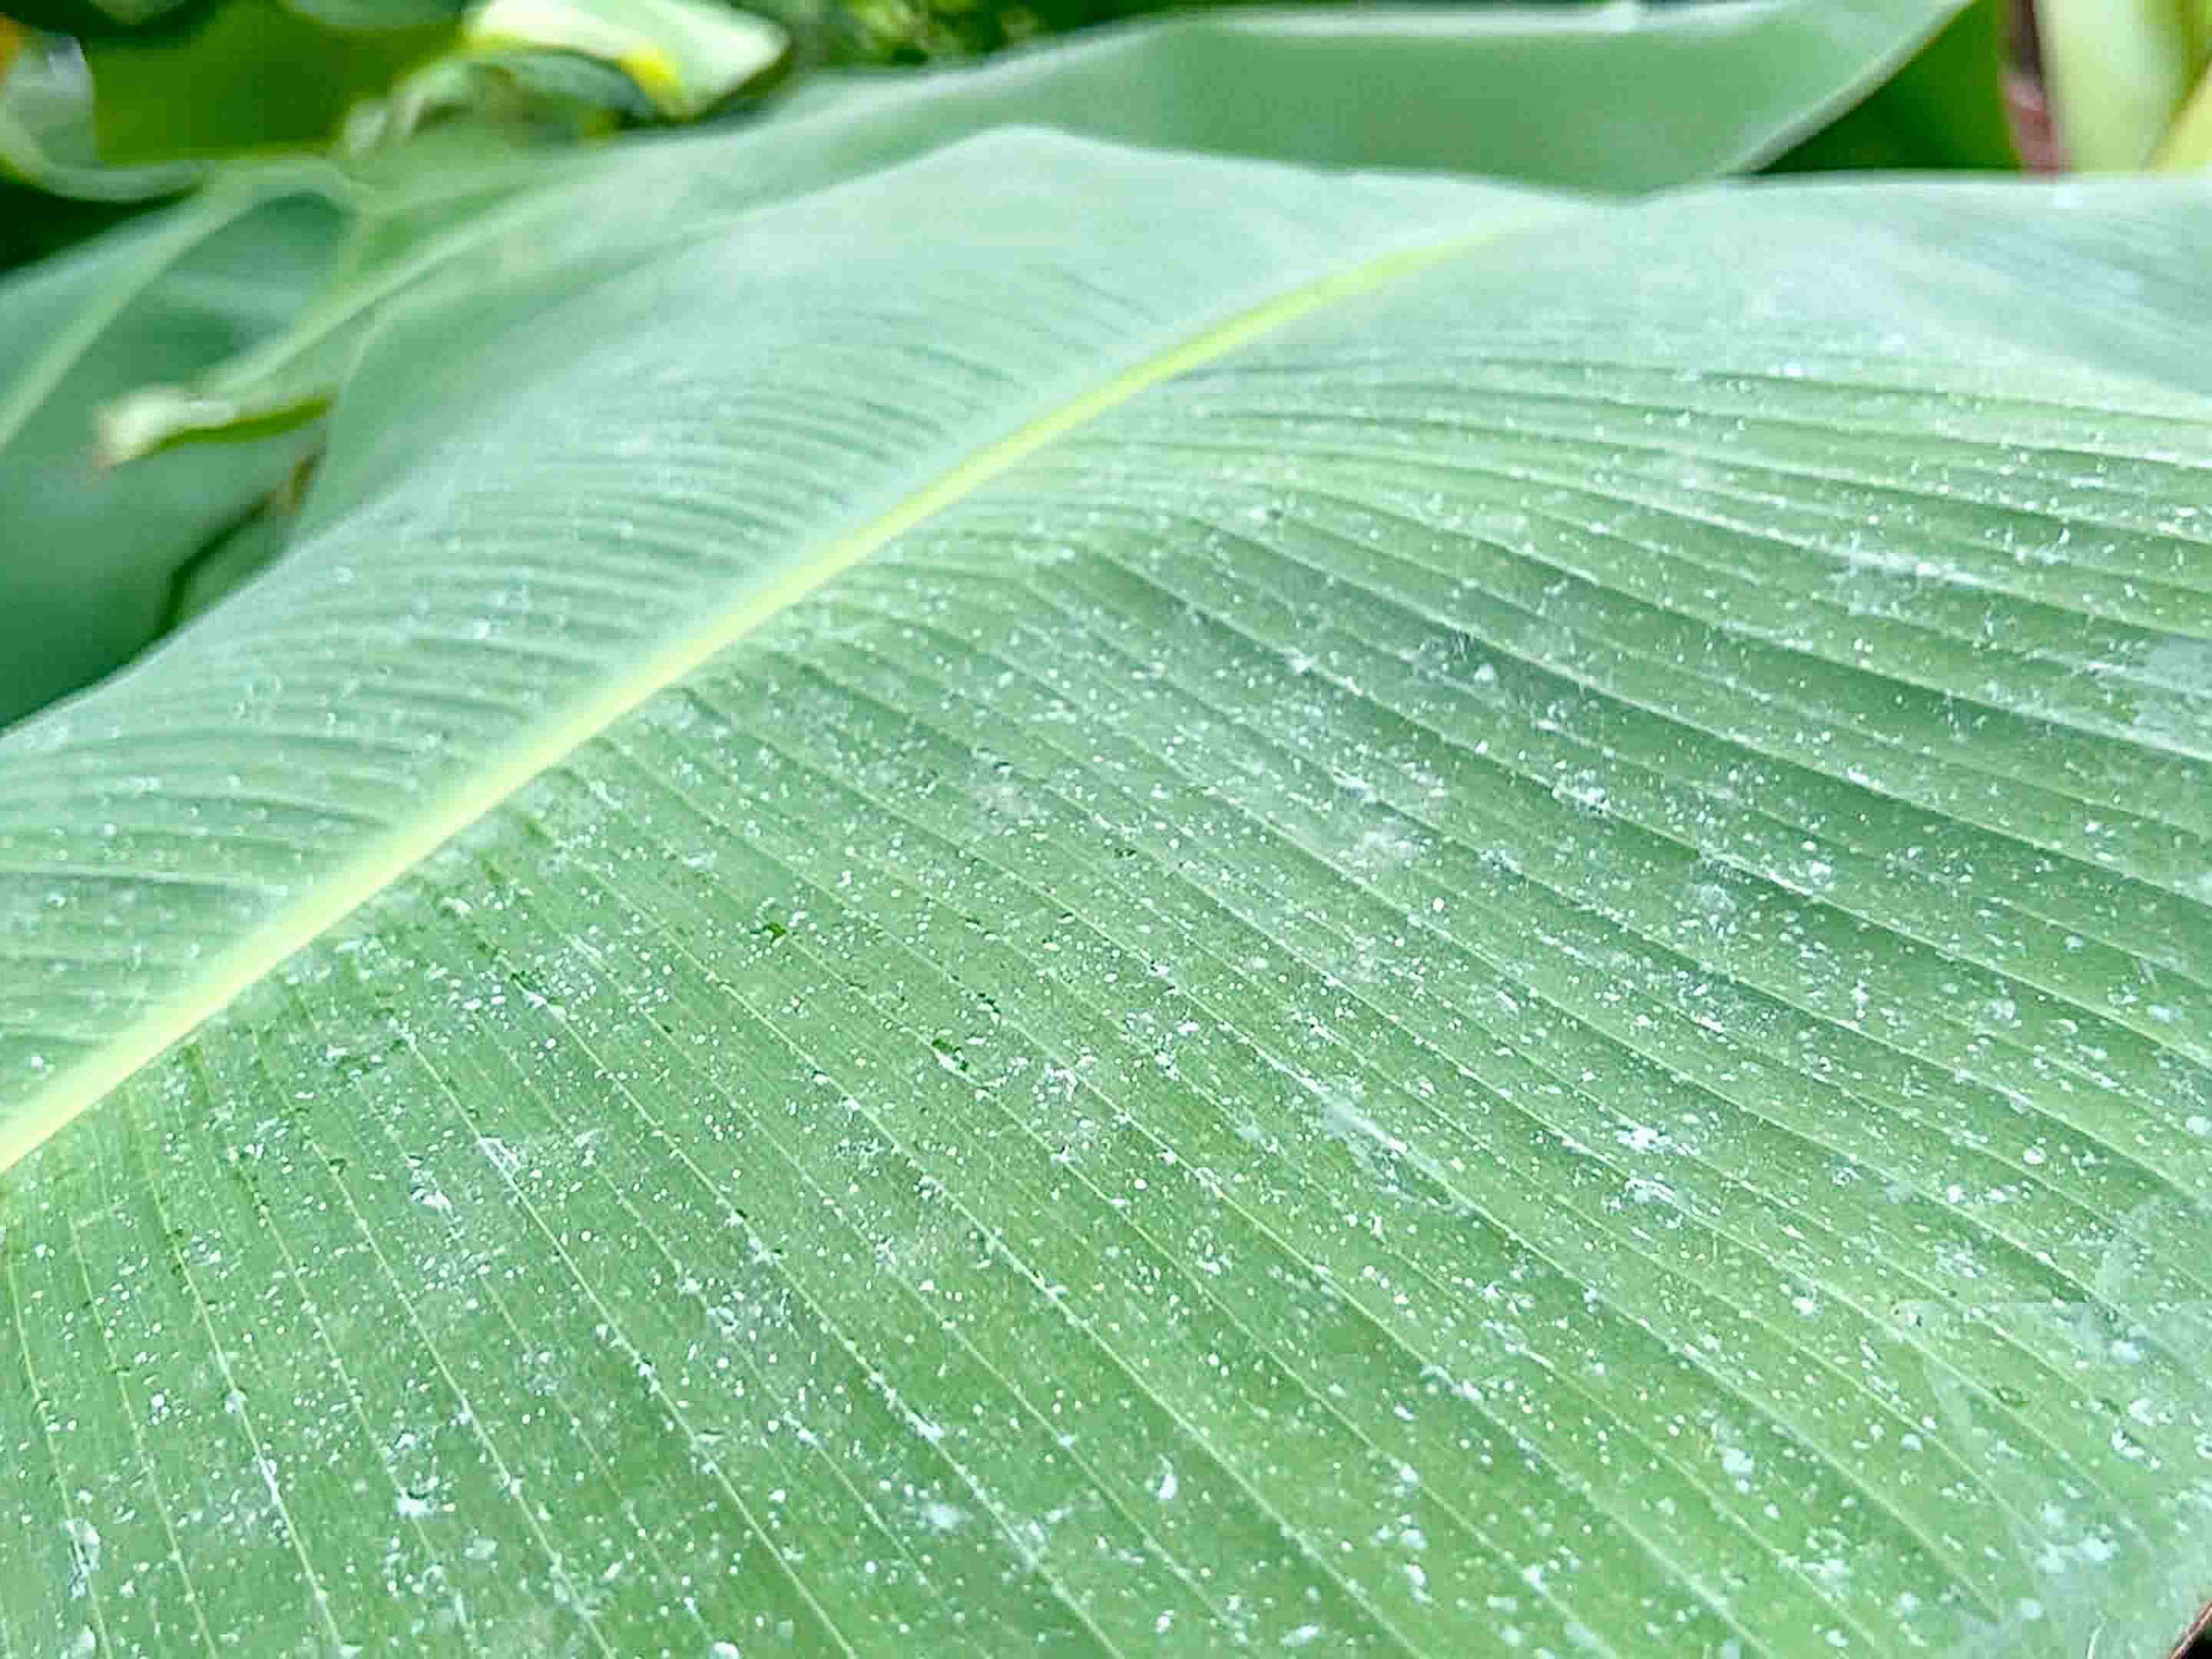 Foliar Fertilizer is Sprayed Evenly on Banana Leaves